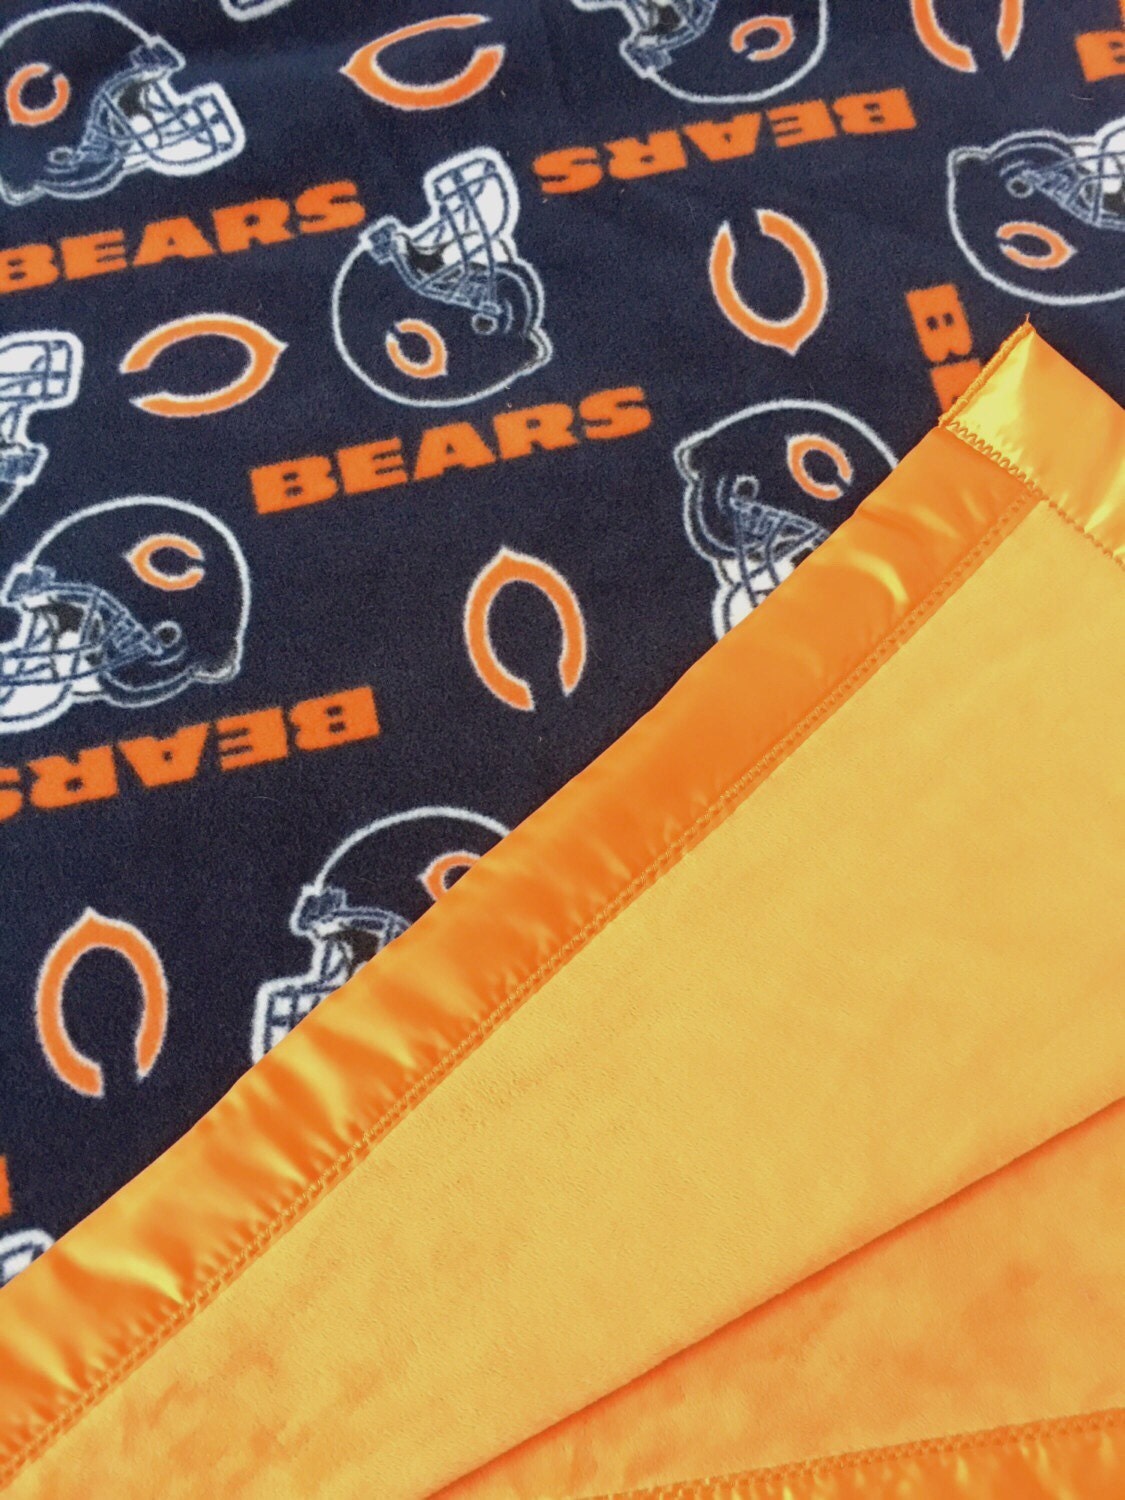 Chicago Bears NFL Fleece Blanket with Orange Cuddle Minky and